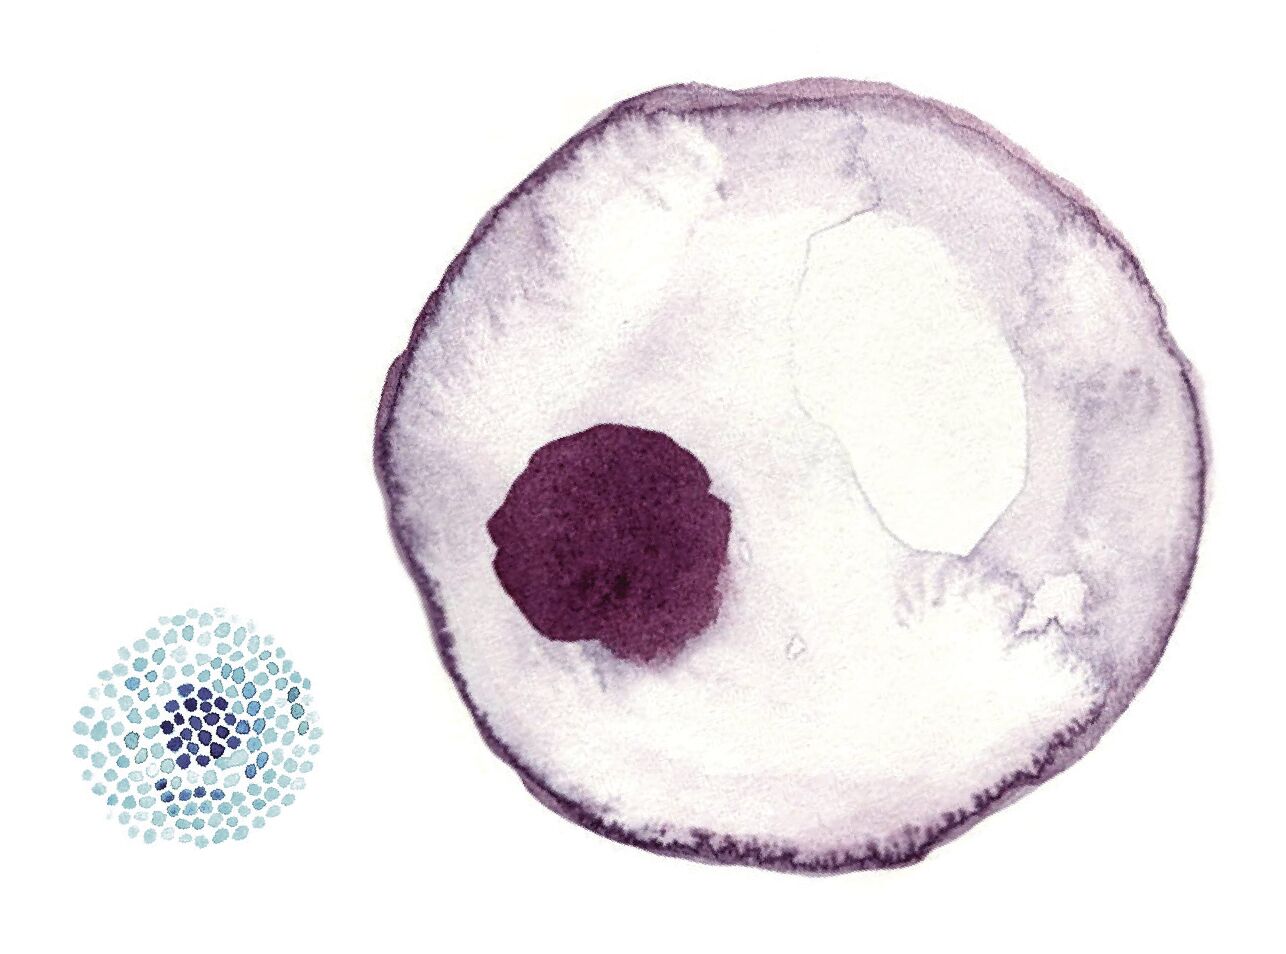 fertility-cells-sdm1022.jpg